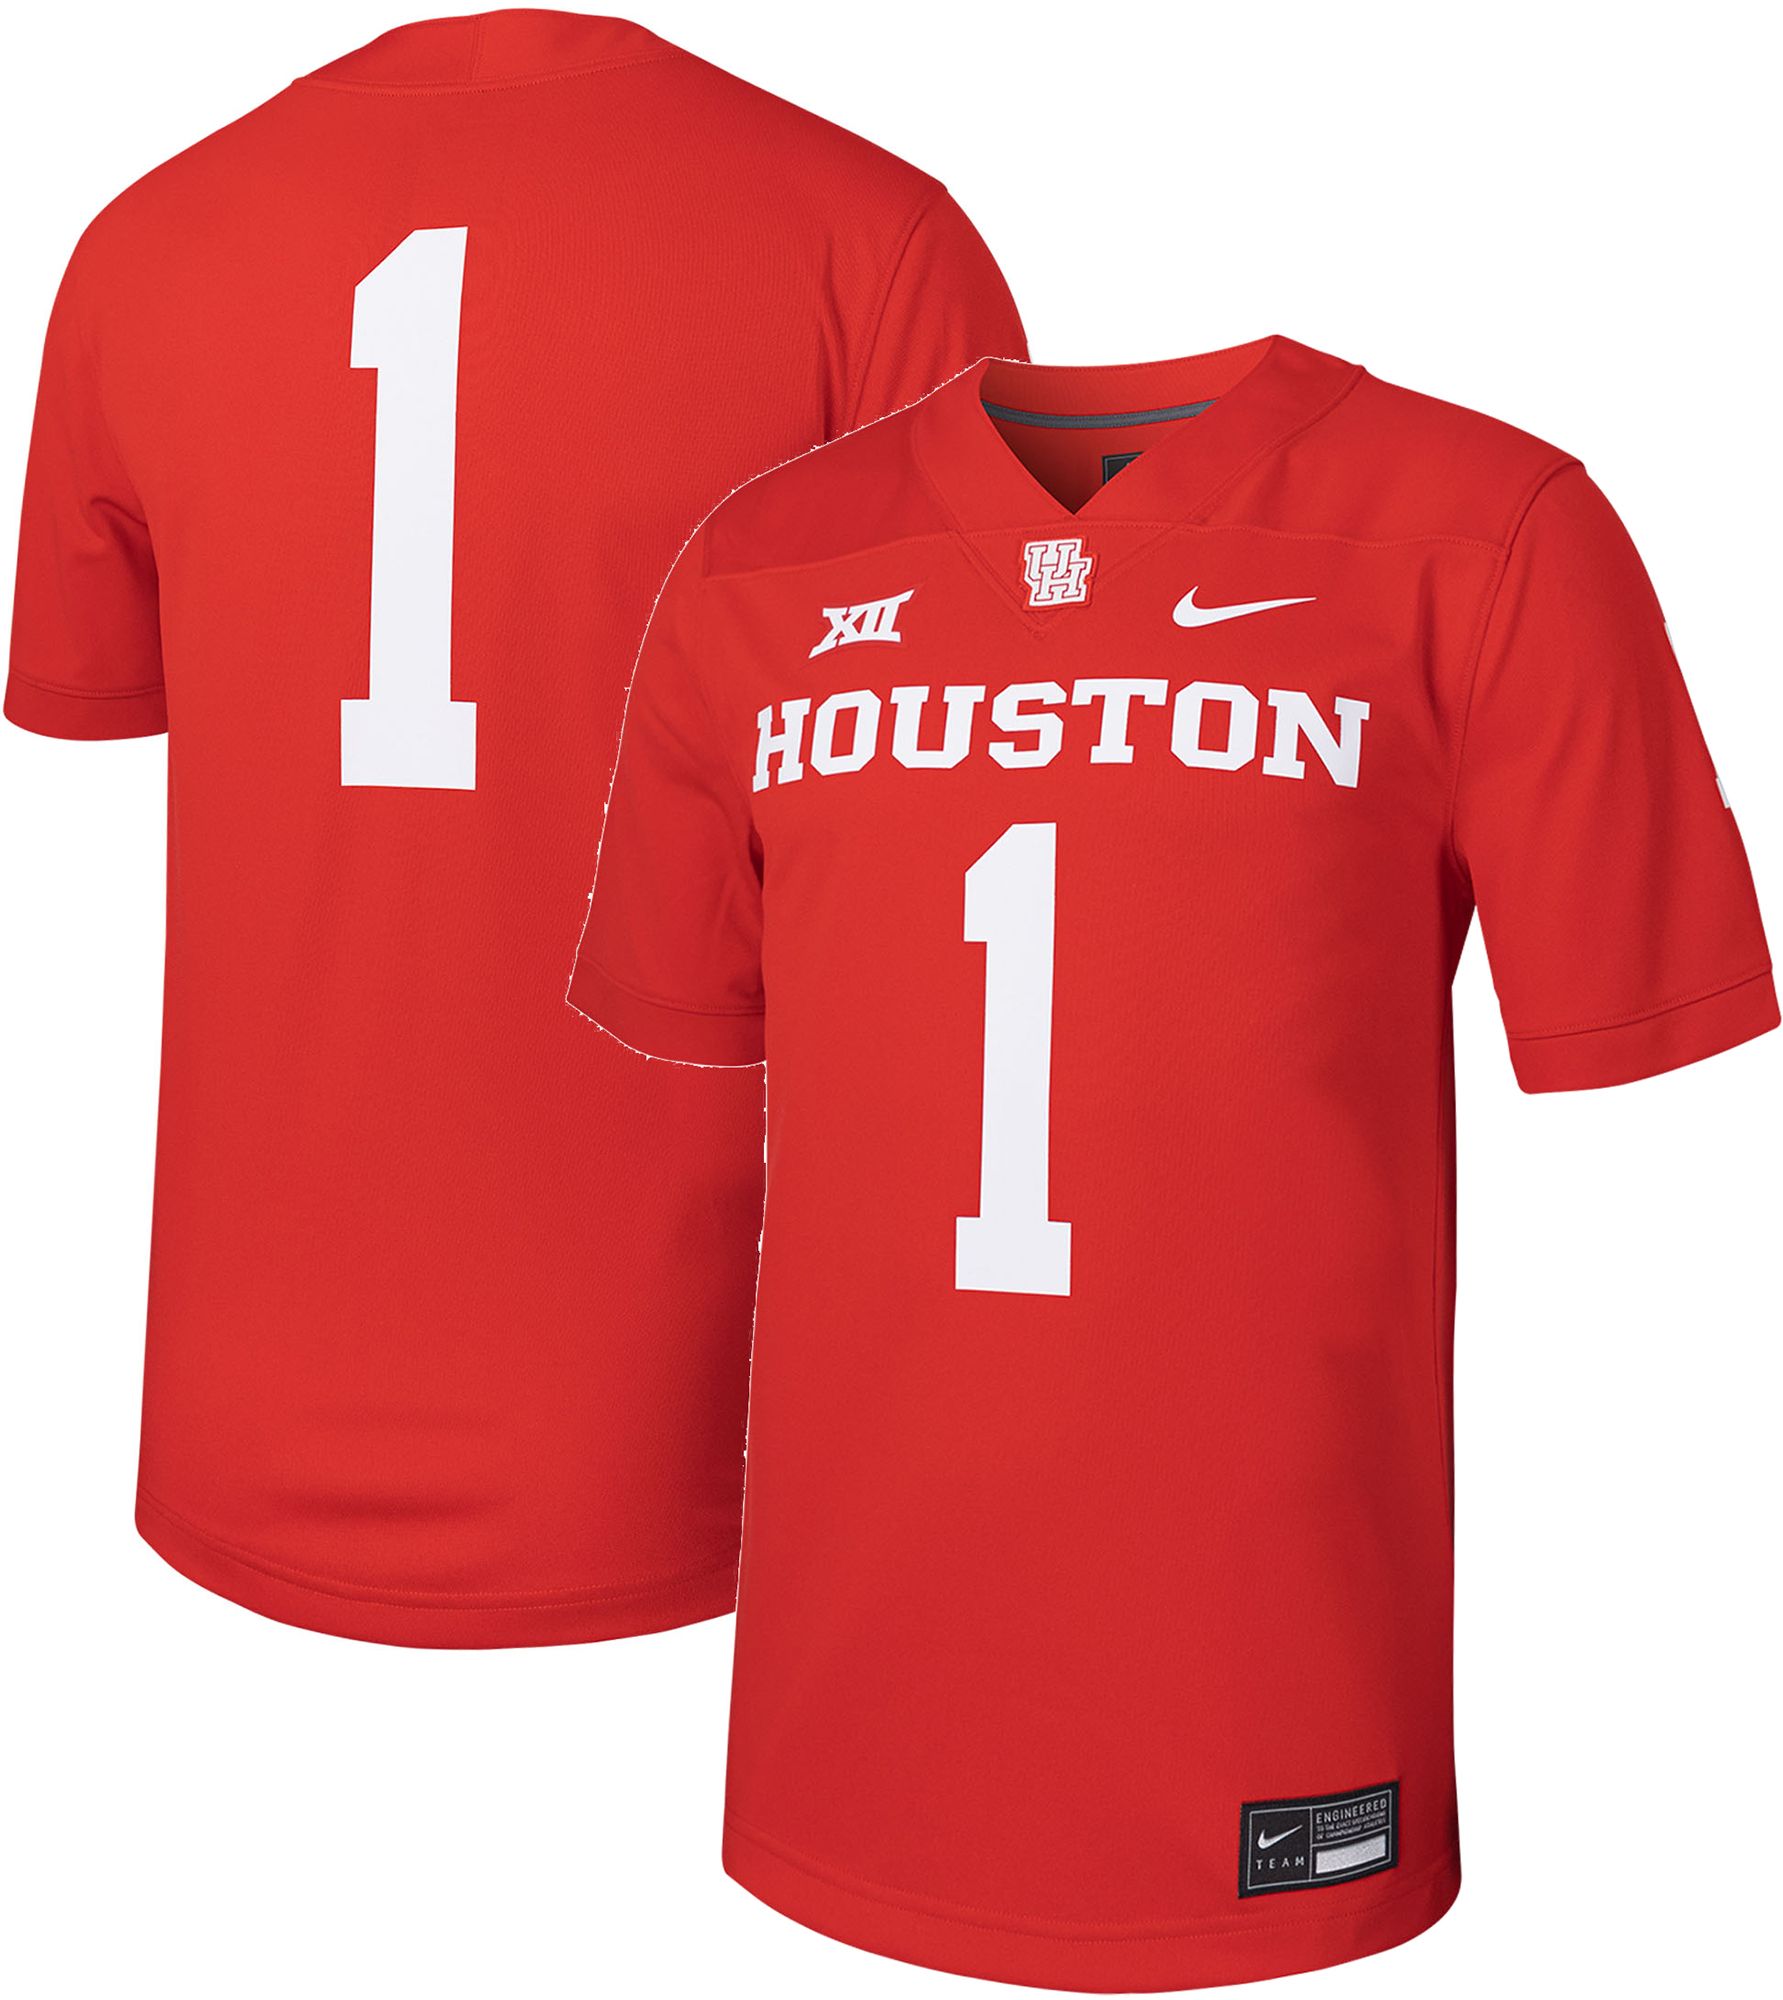 Houston football shirt